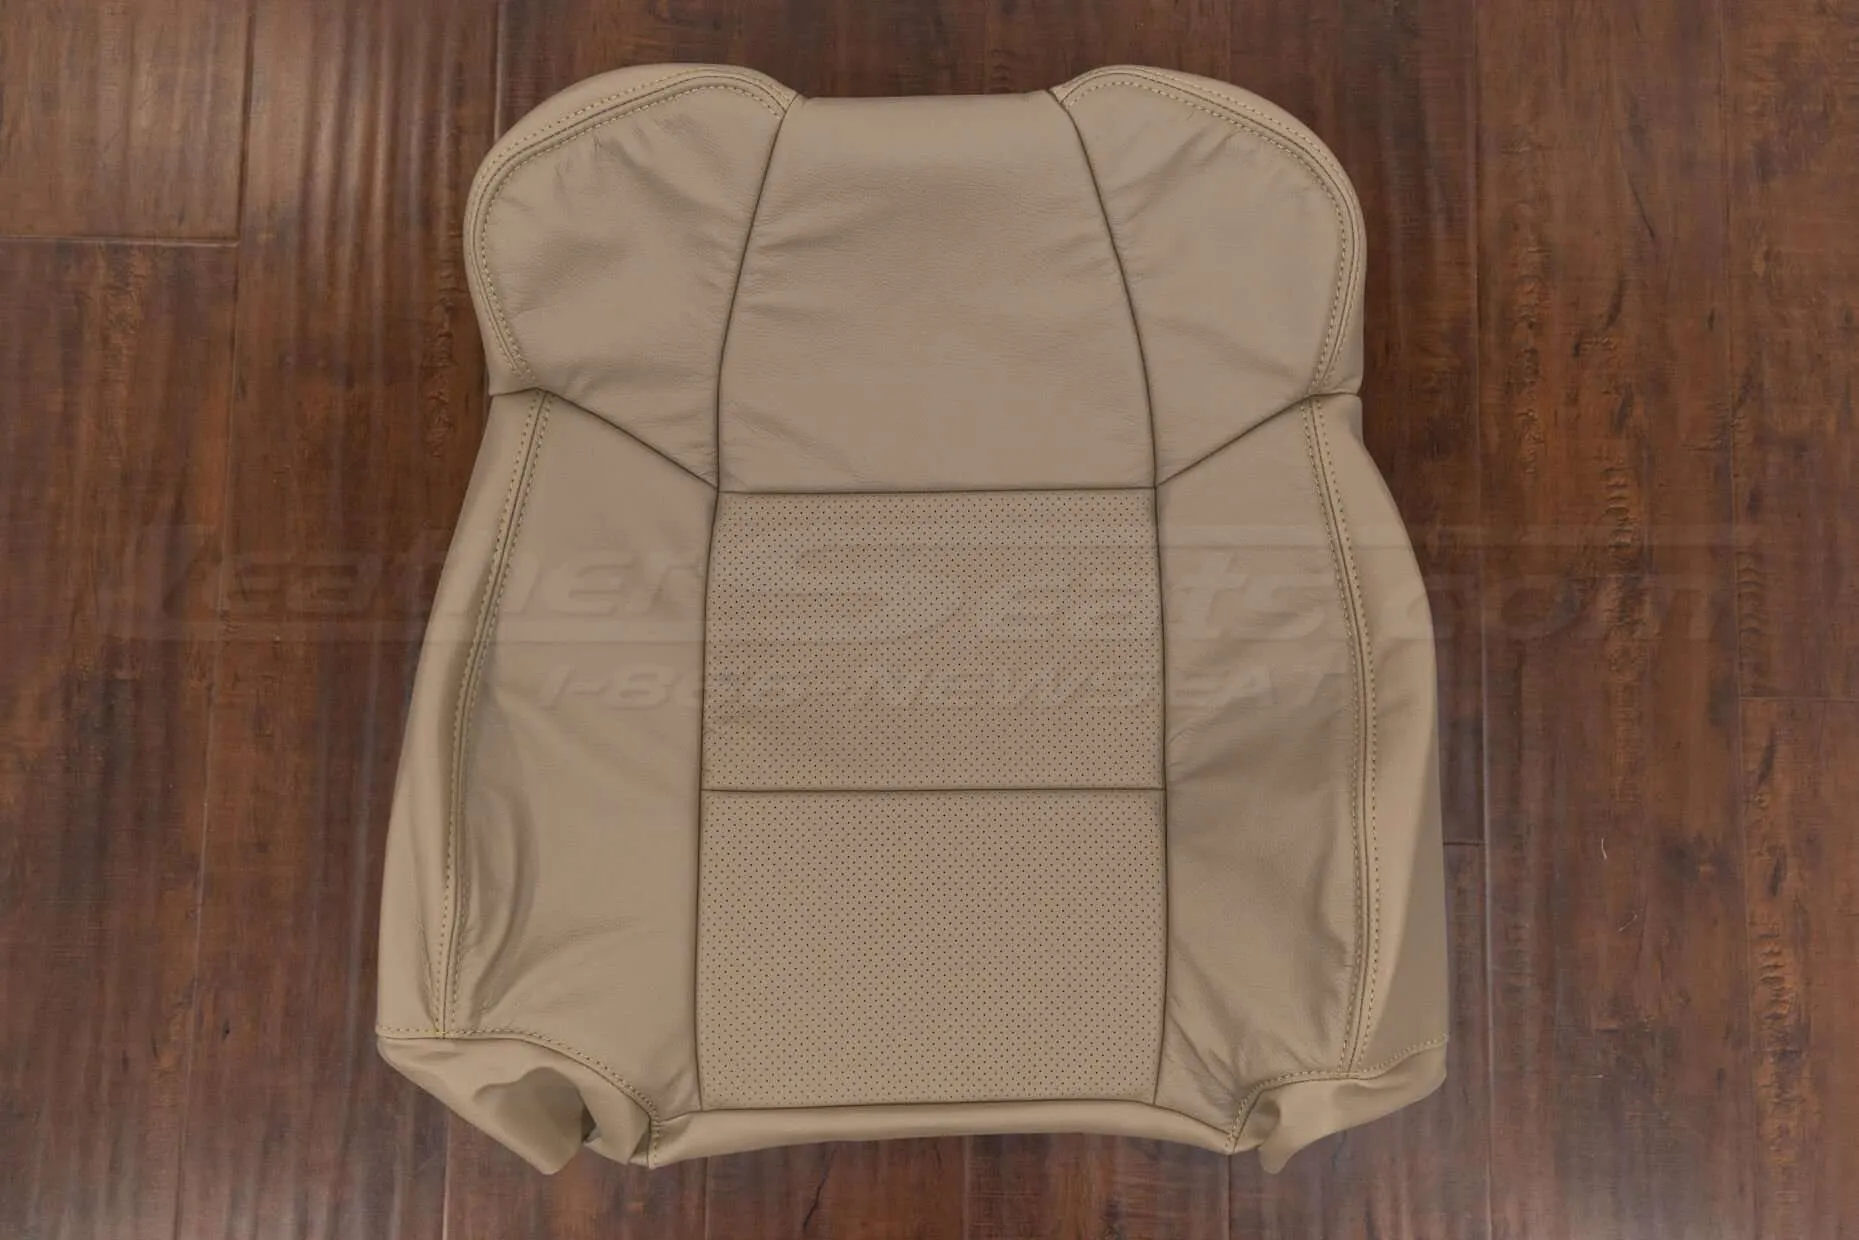 Ford Superduty front backrest upholstery